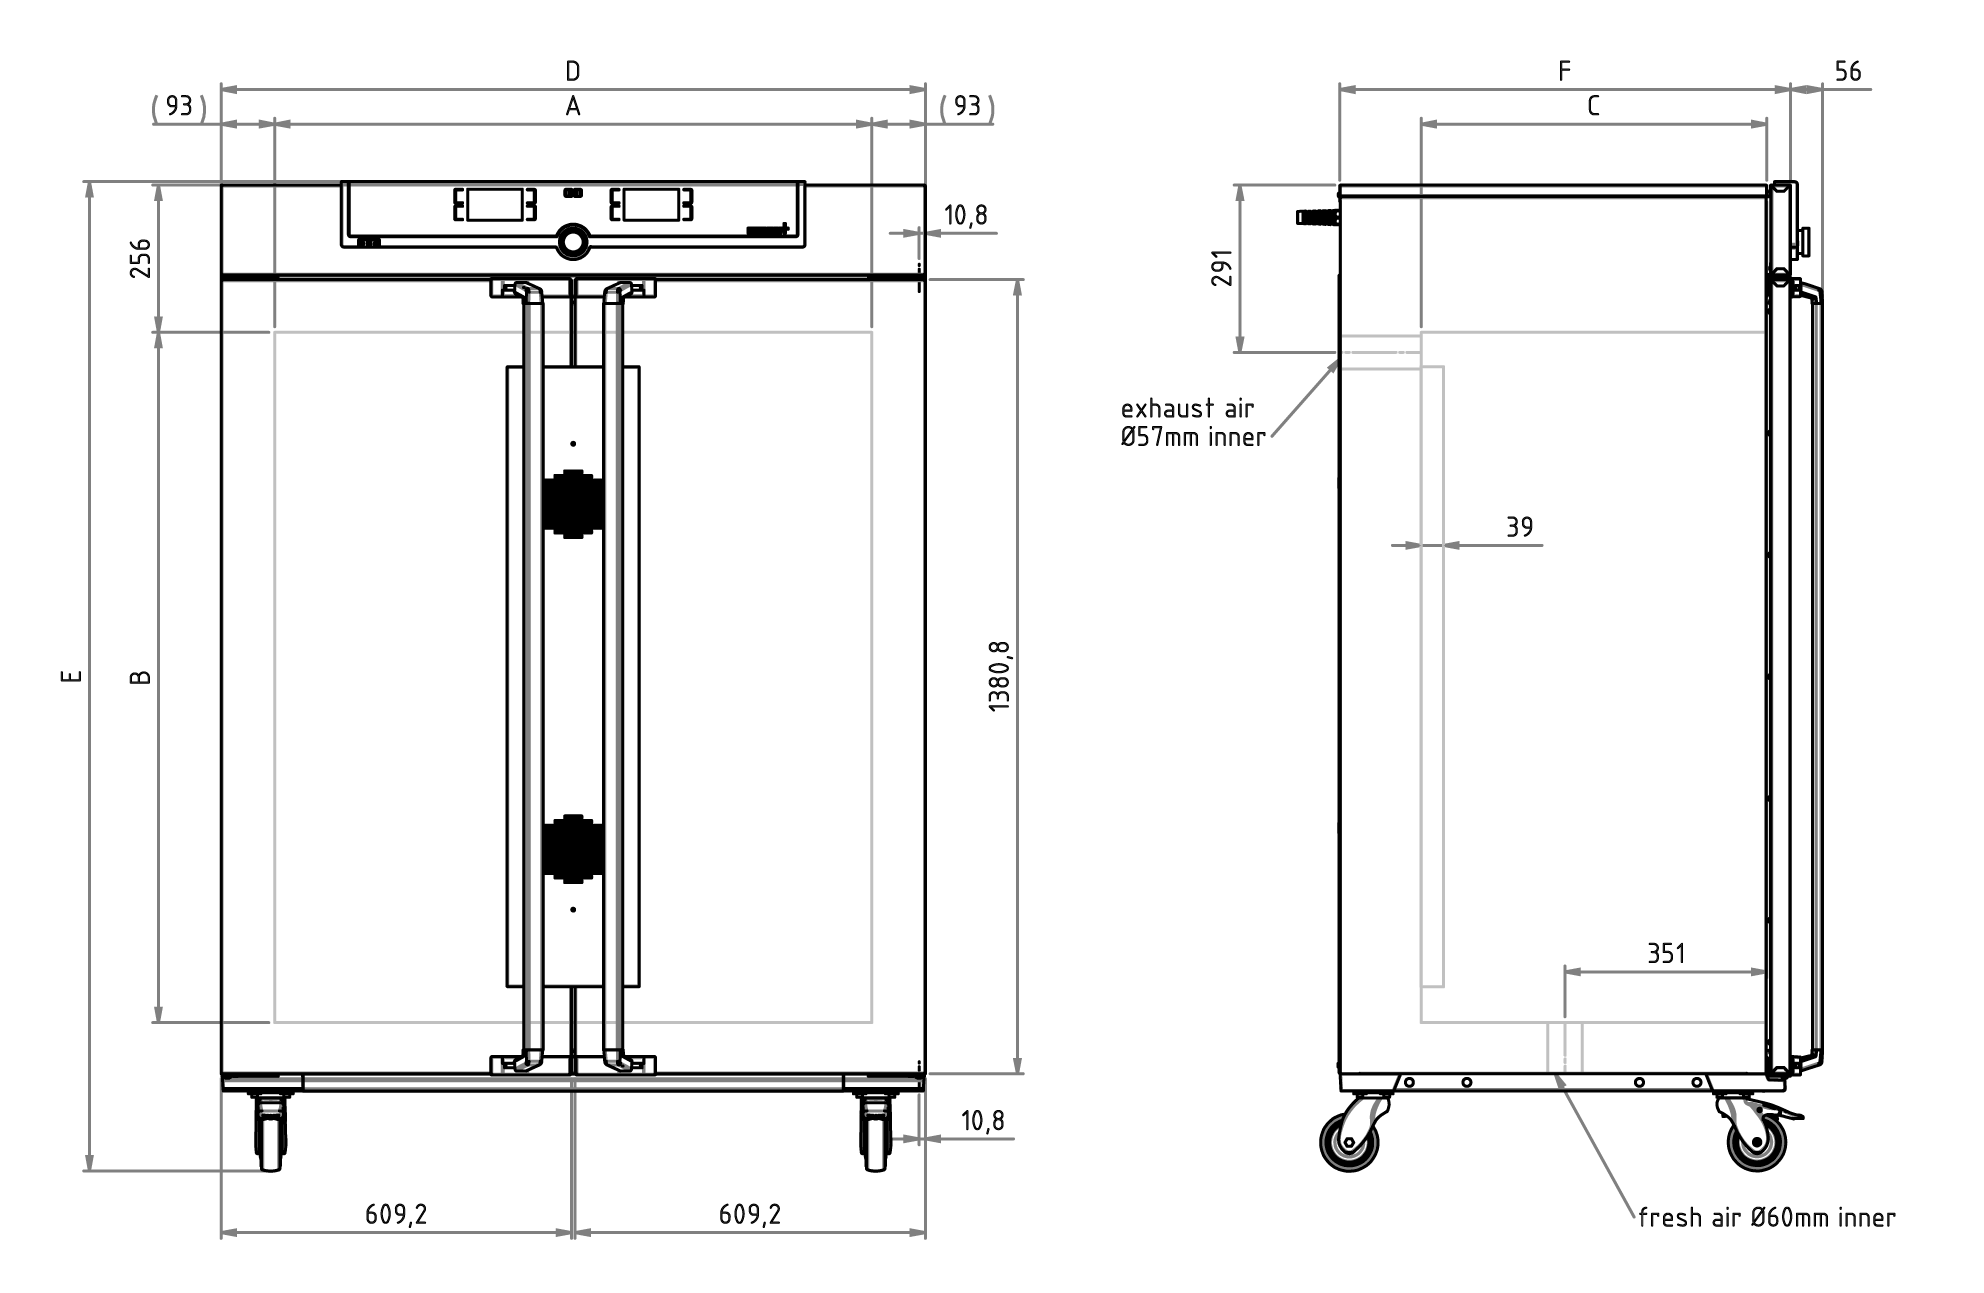 Sketch Universal oven dishwasher UFP800DW